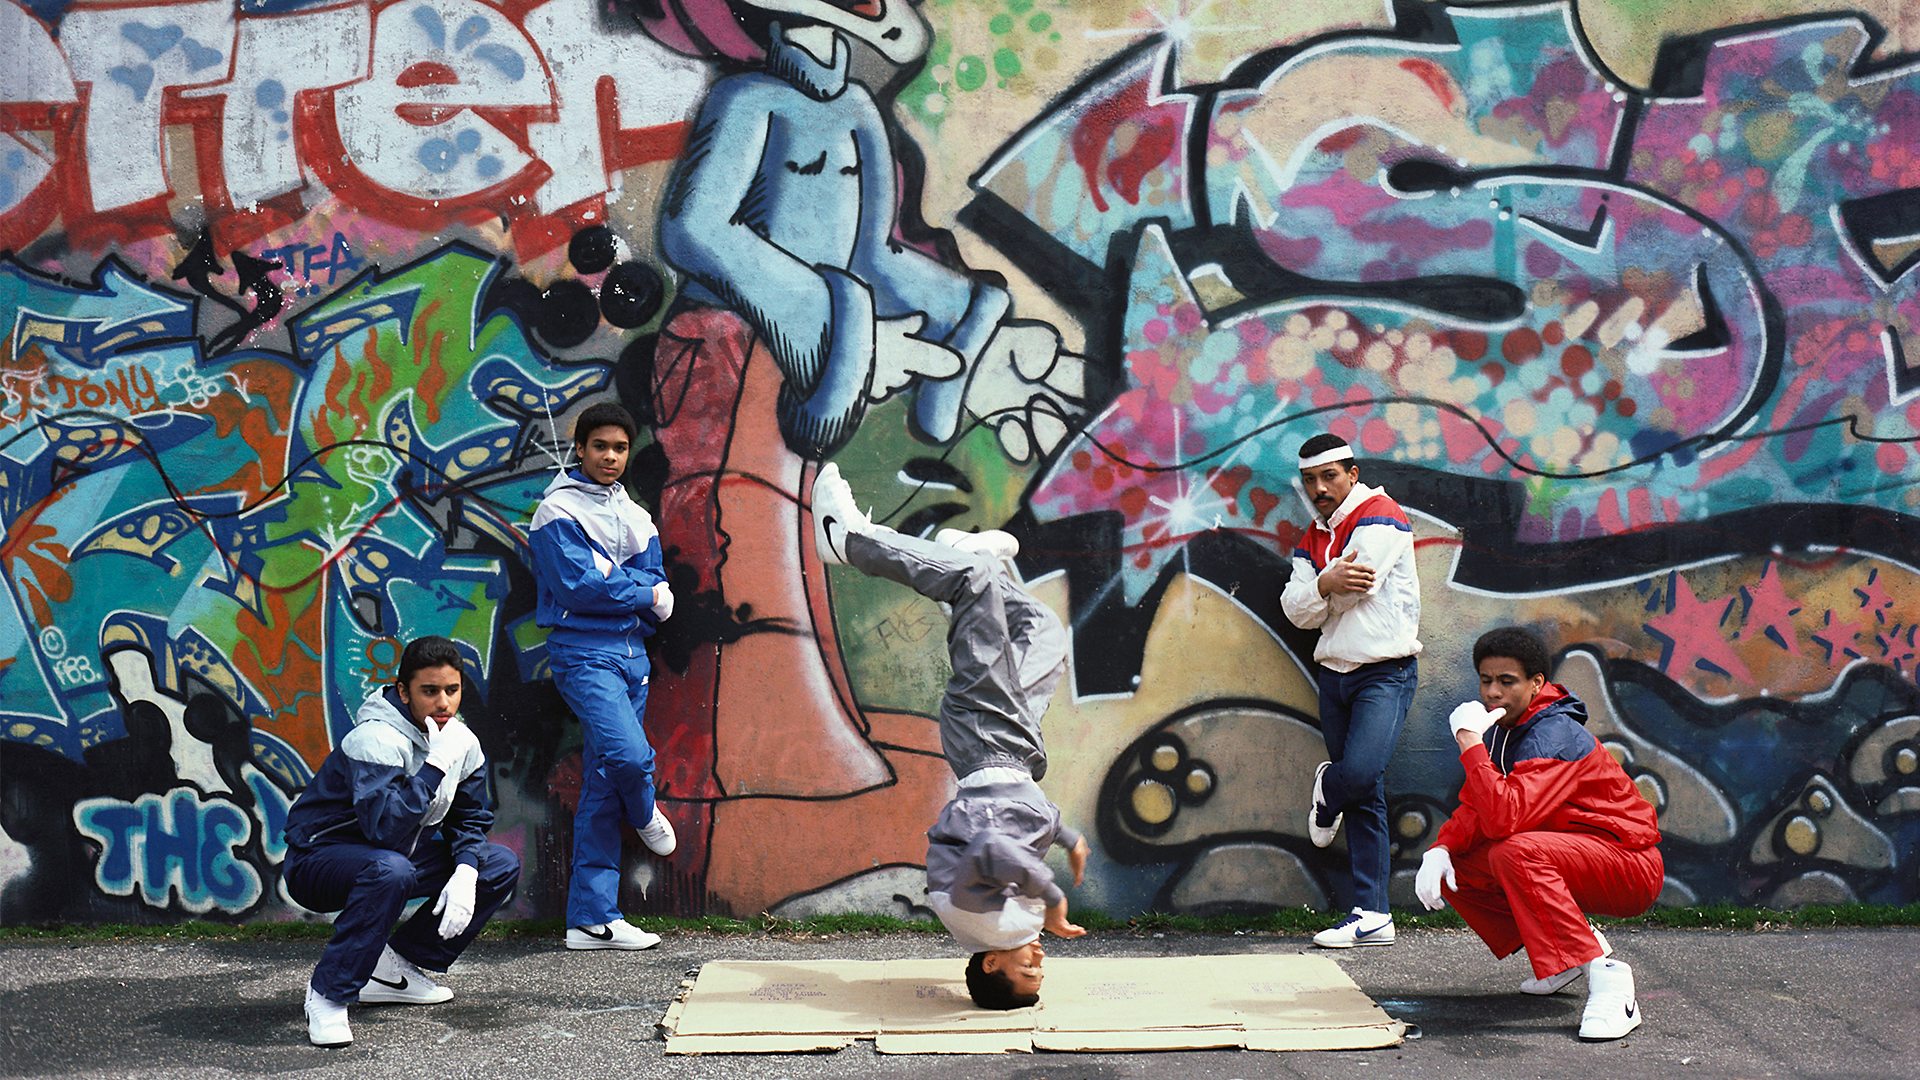 Five breakdancing teenagers in 1984